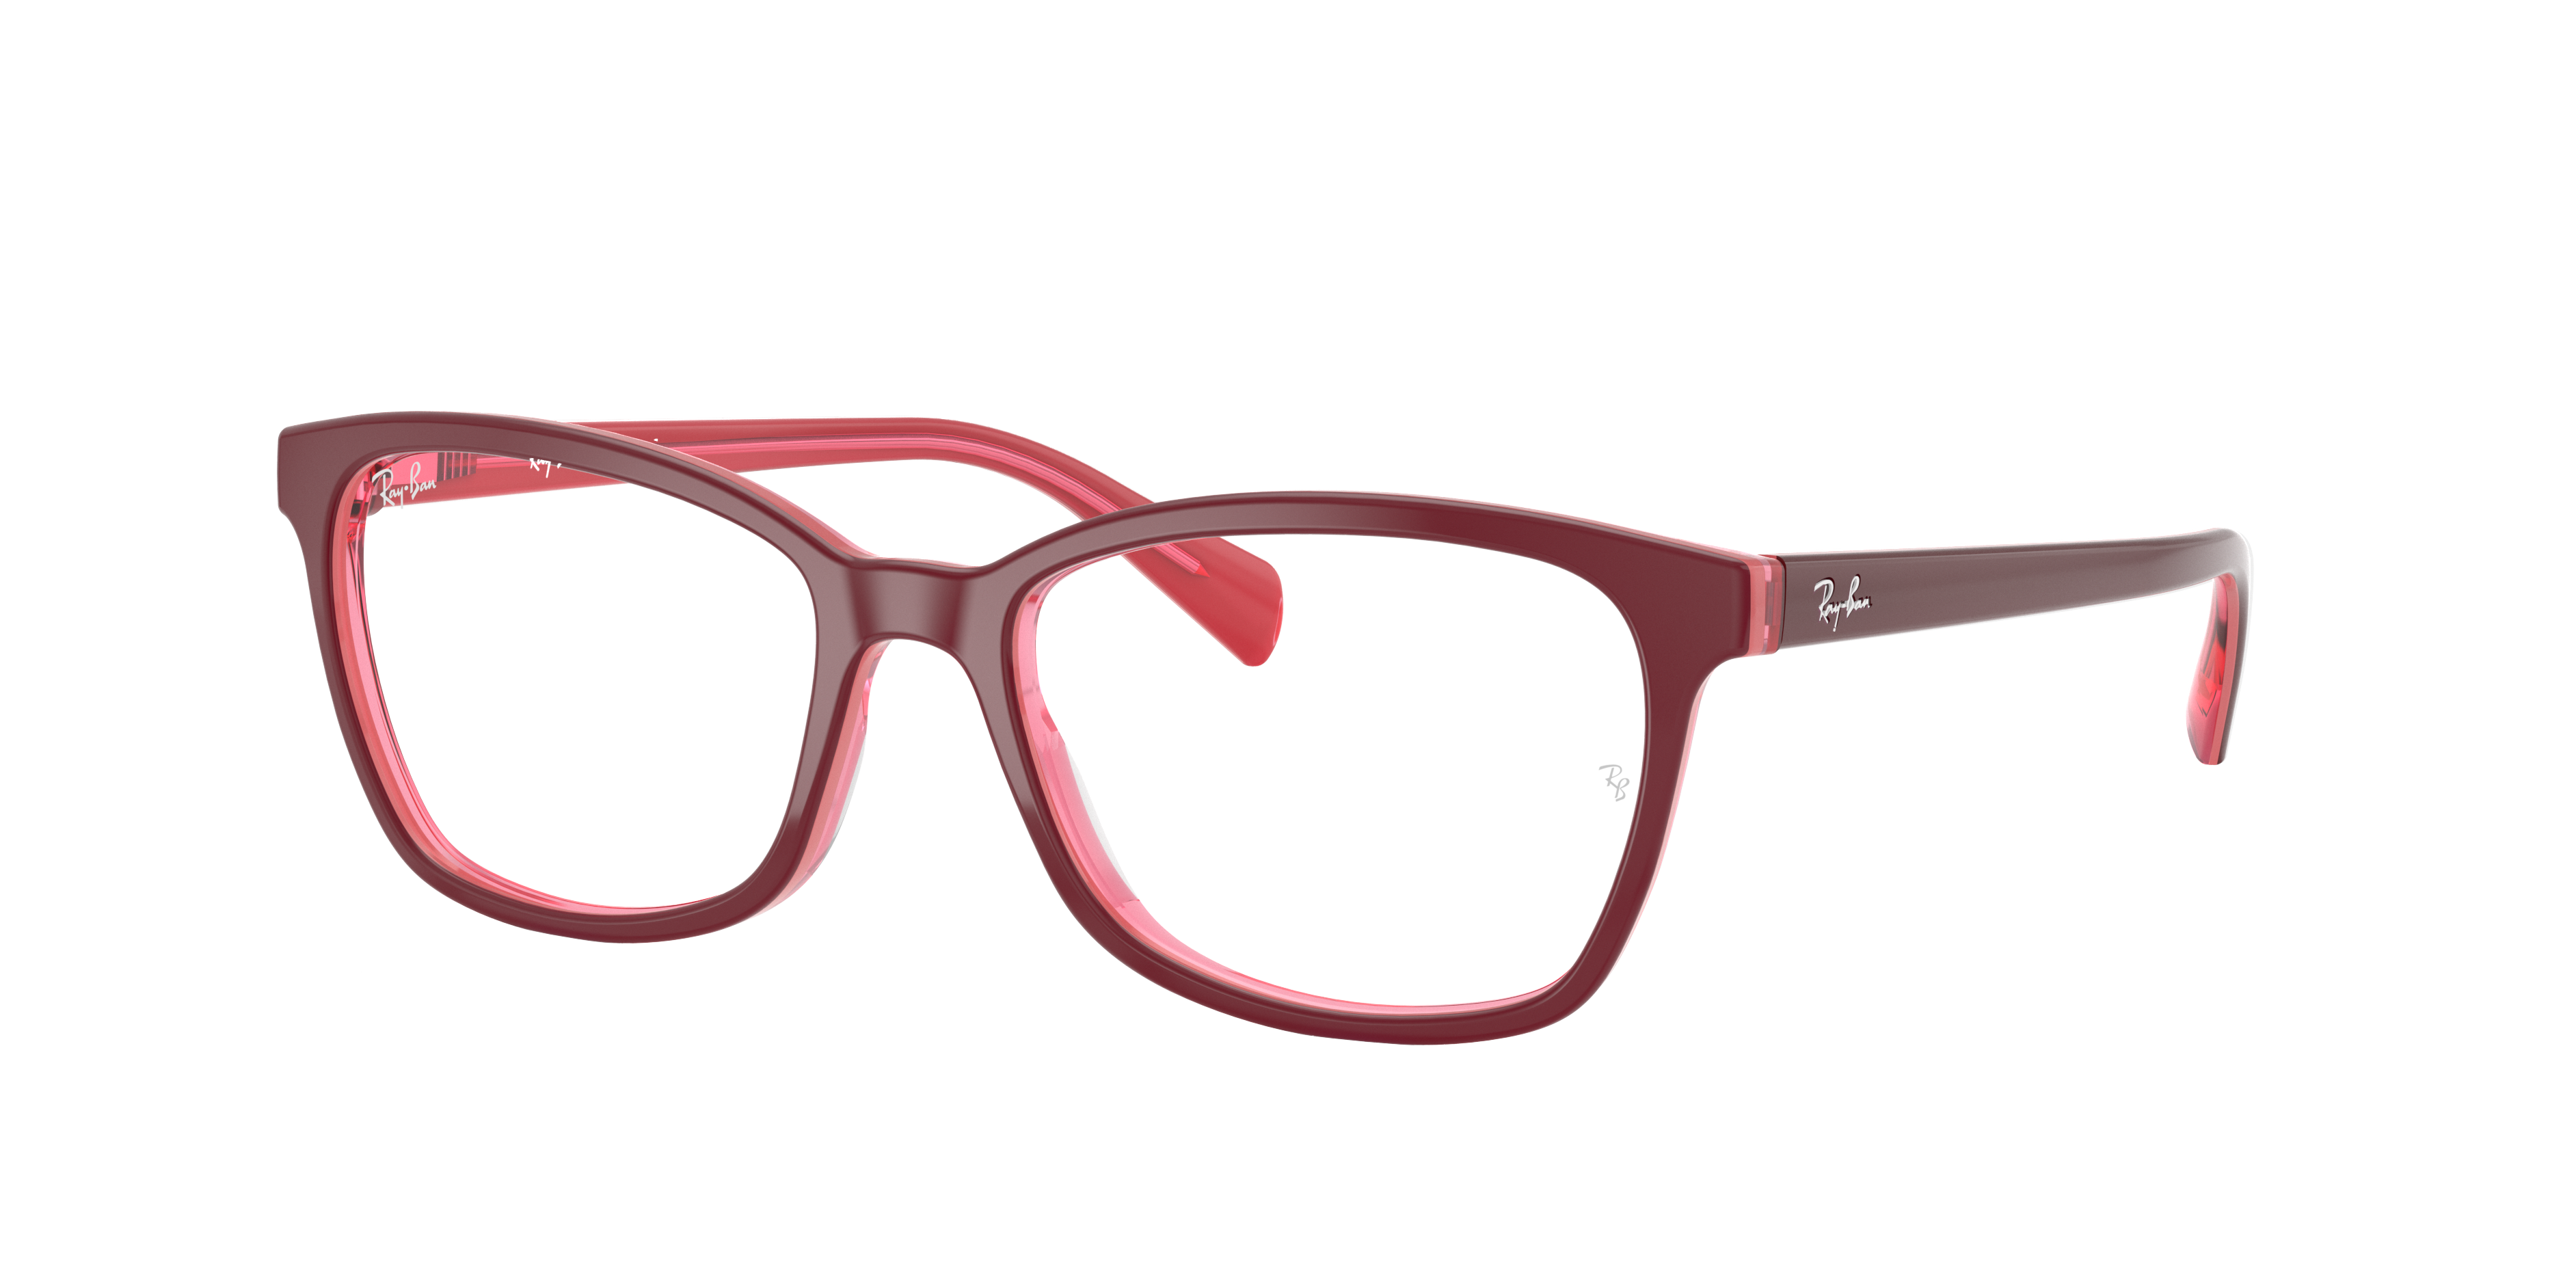 Rb5362 Optics Eyeglasses with Purple-Reddish Frame | Ray-Ban®